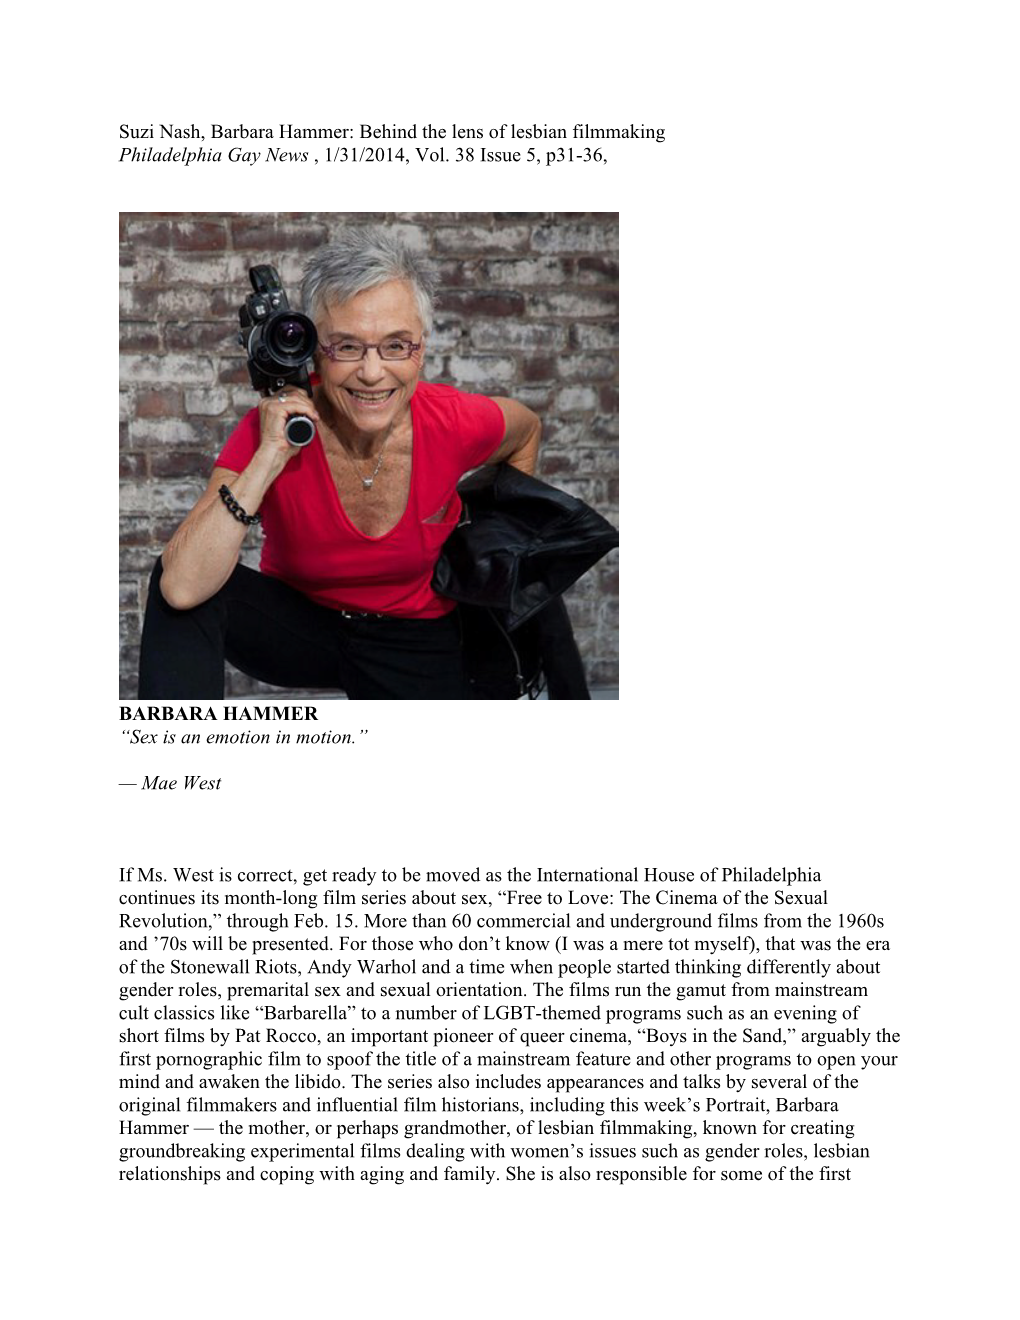 Suzi Nash, Barbara Hammer: Behind the Lens of Lesbian Filmmaking Philadelphia Gay News , 1/31/2014, Vol. 38 Issue 5, P31-36